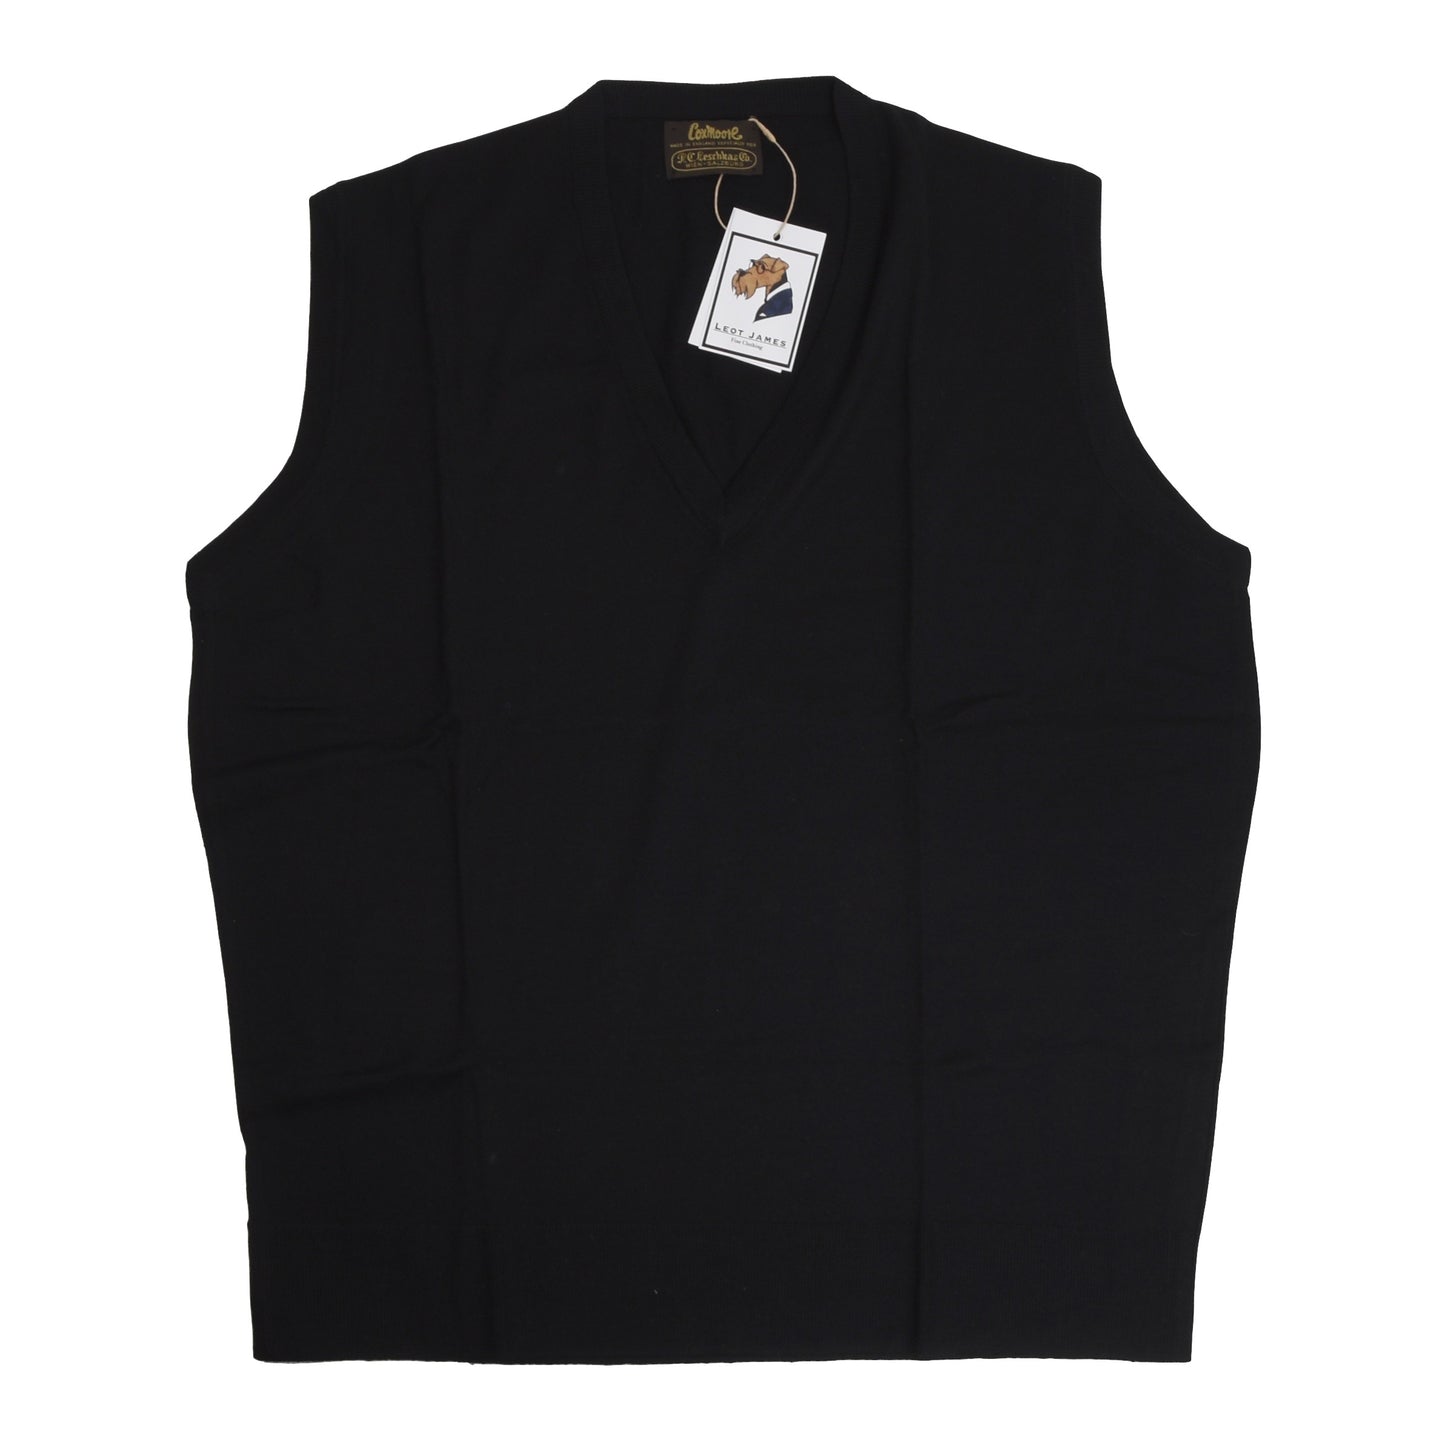 Coxmoore of England Sweater Vest Size 46in/117cm  - Black